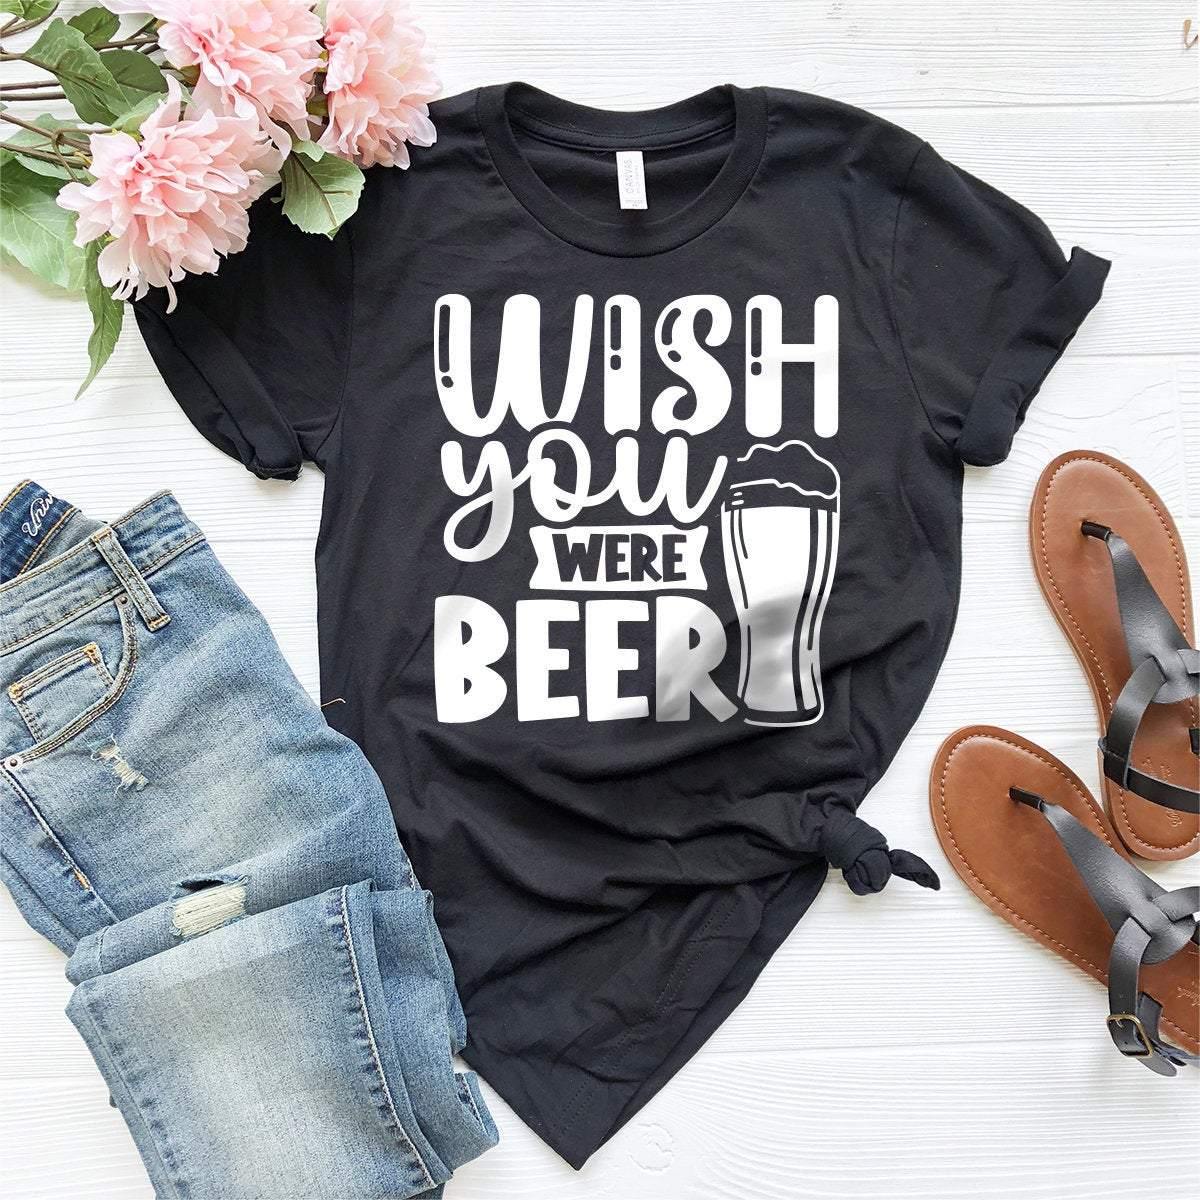 Beer T-Shirt, Drinking Shirt, Funny Beer Shirt, Beer Me Tee, Country Shirt, Craft Beer Shirt, Beer Lover Tee, Wish You Were Beer Shirt - Fastdeliverytees.com